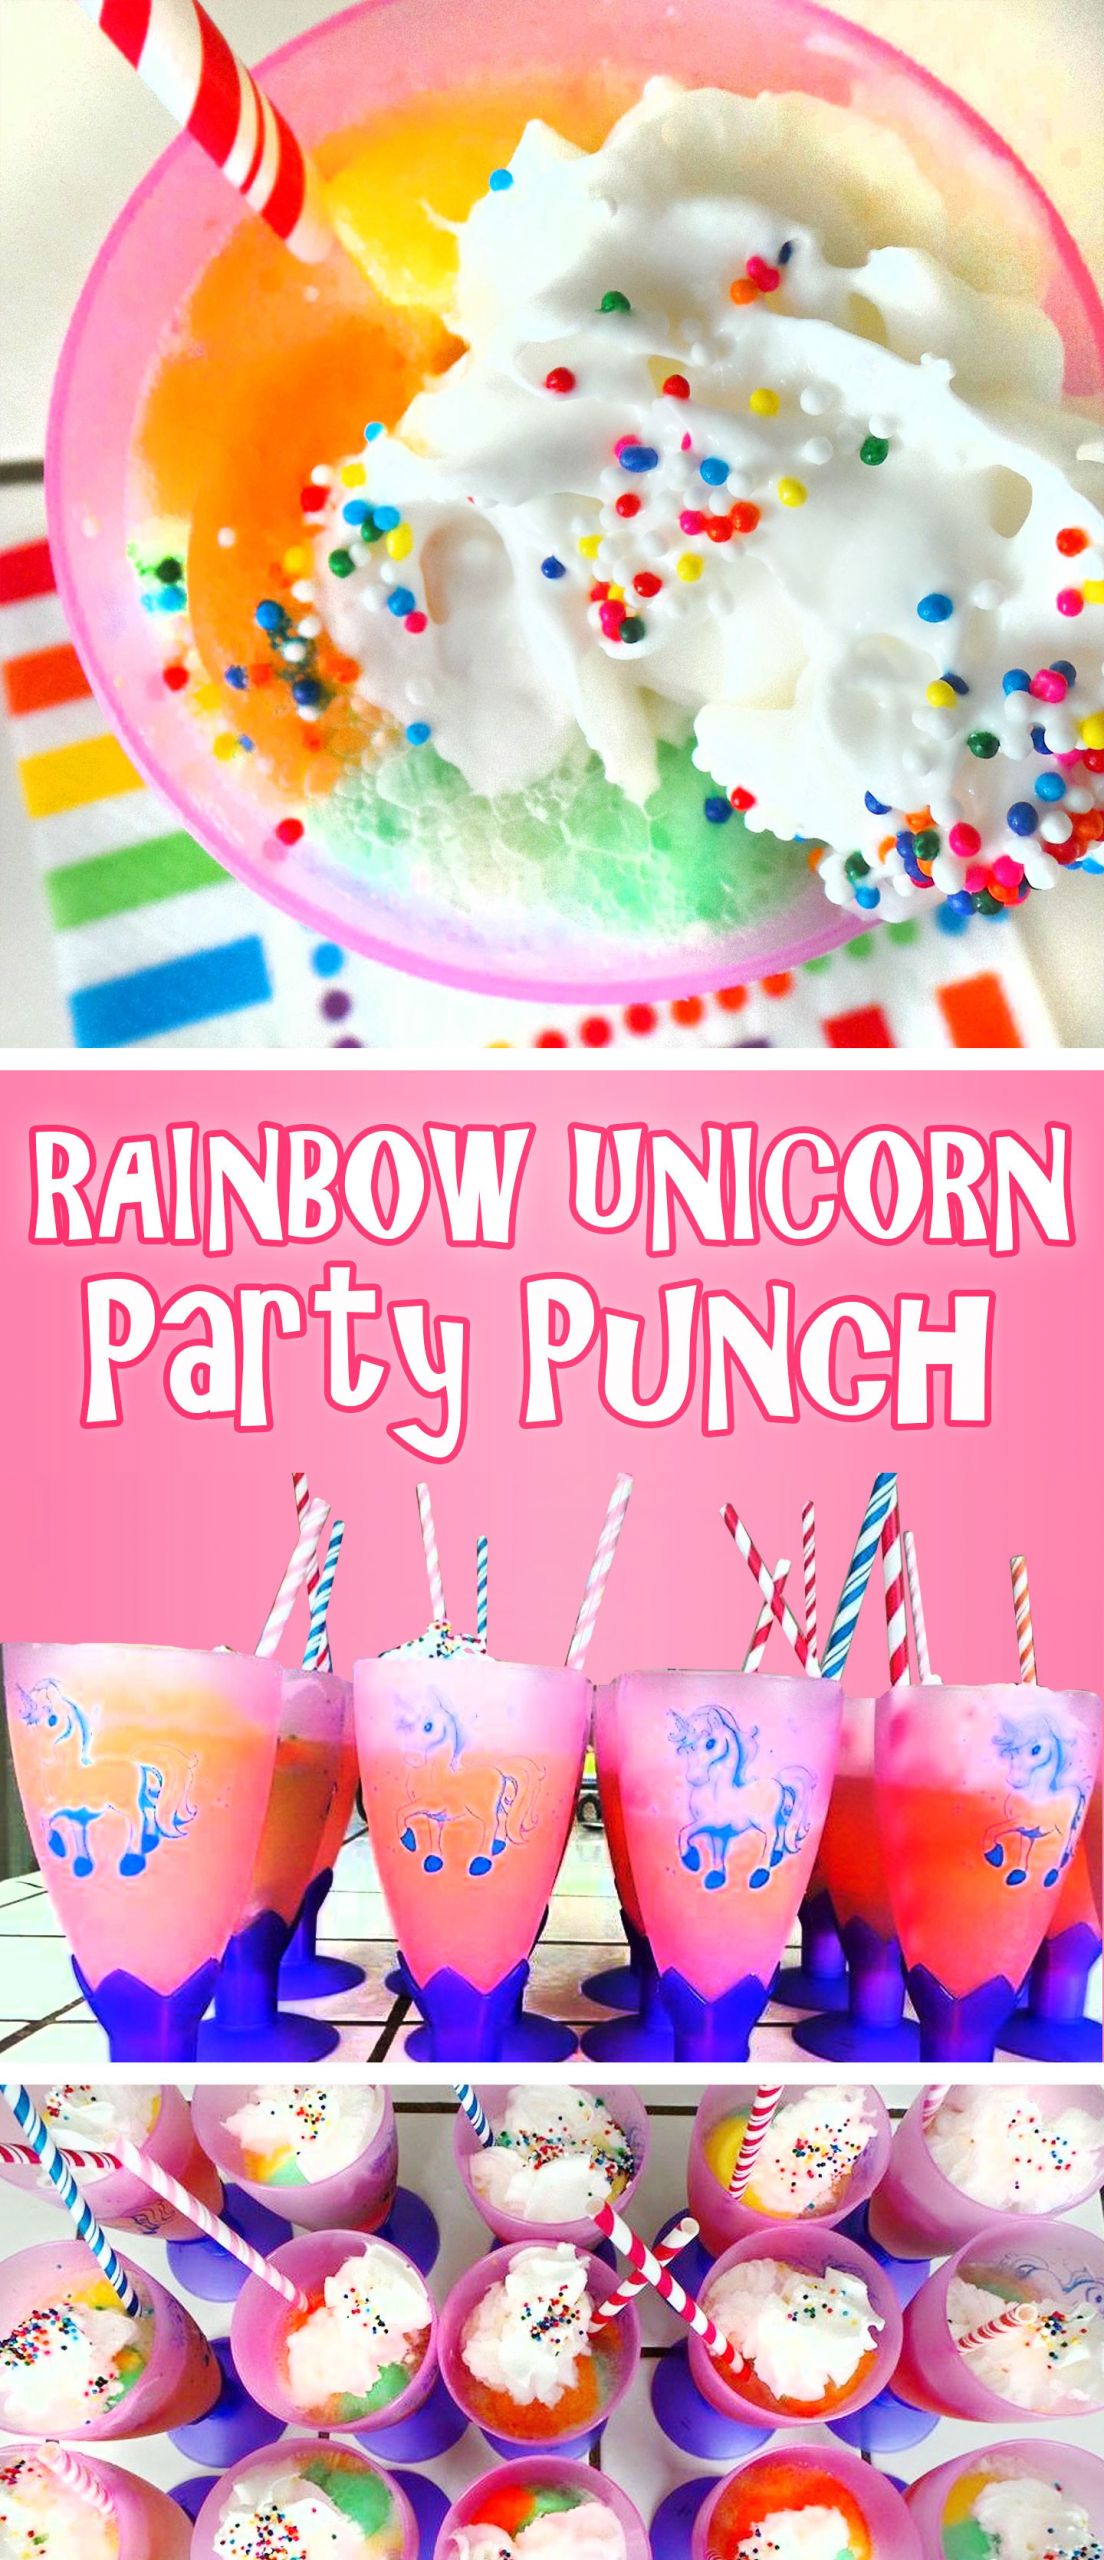 Unicorn Party Theme Food Ideas
 Rainbow Unicorn Party Punch